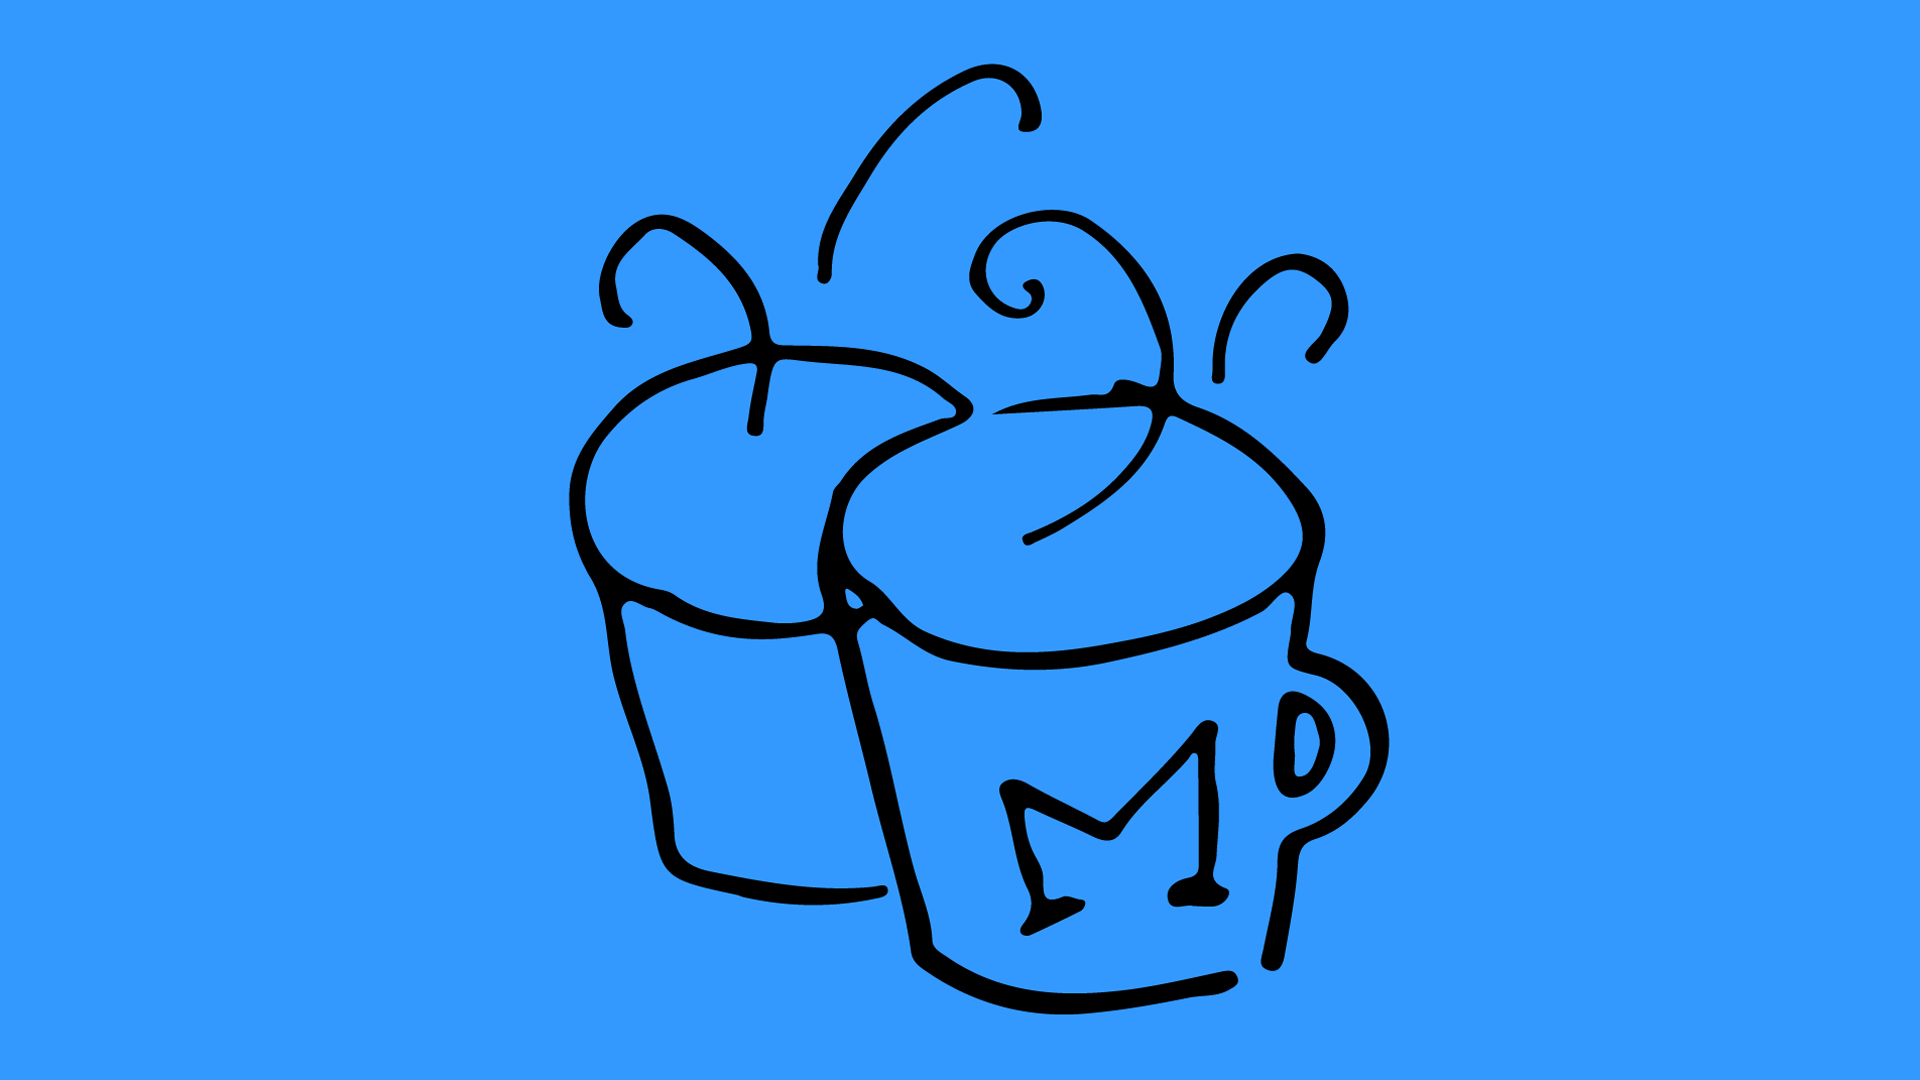 Illustration of coffee mugs on blue background